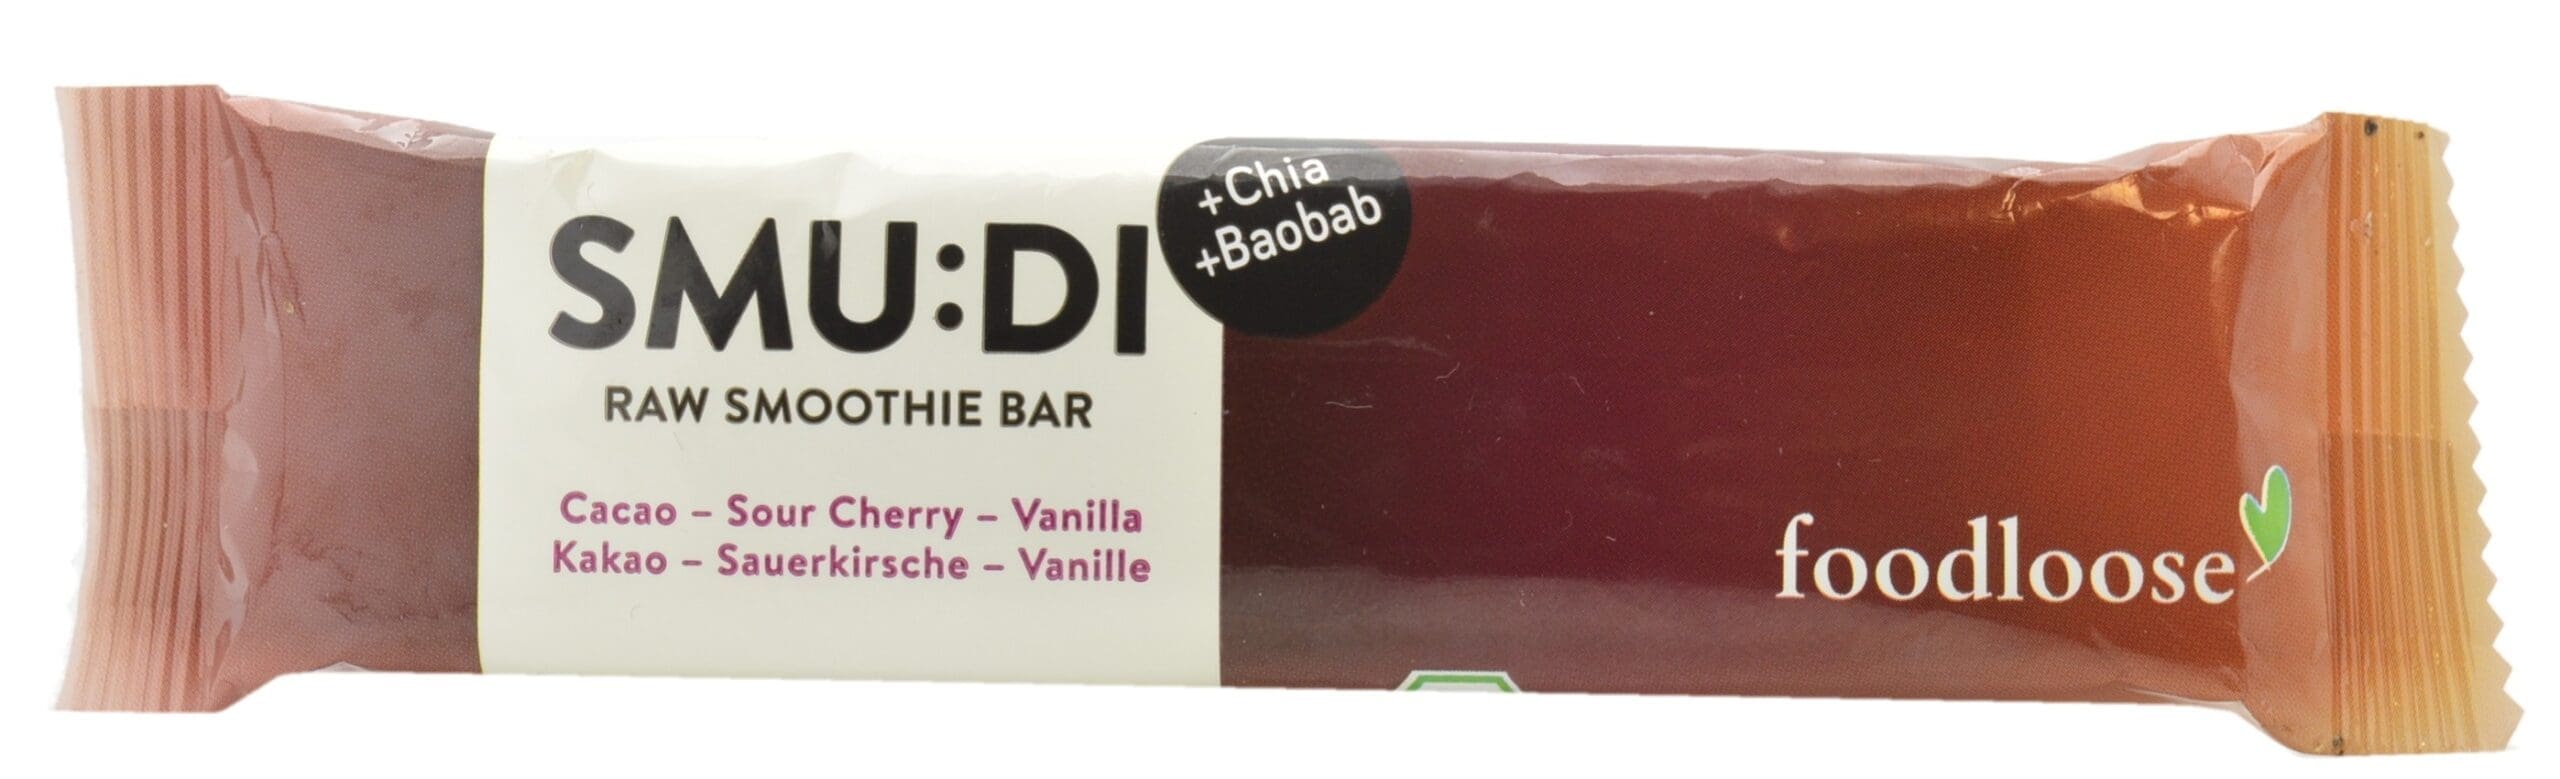 Foodloose SMU:DI, Cacao Sour Cherry Vanilla Raw Smoothie Bar